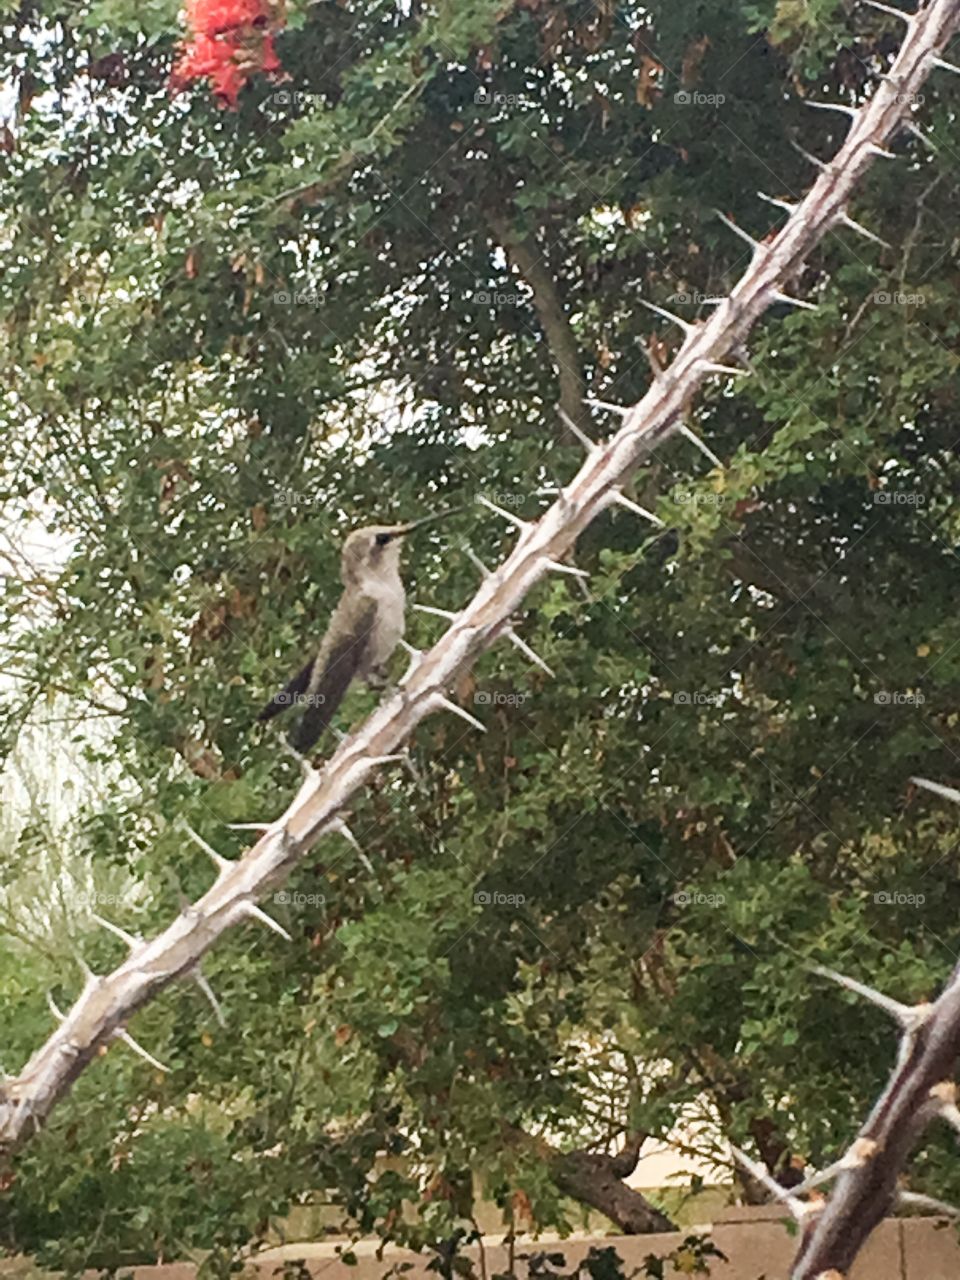 Hummingbird sitting on an ocotillo cactus